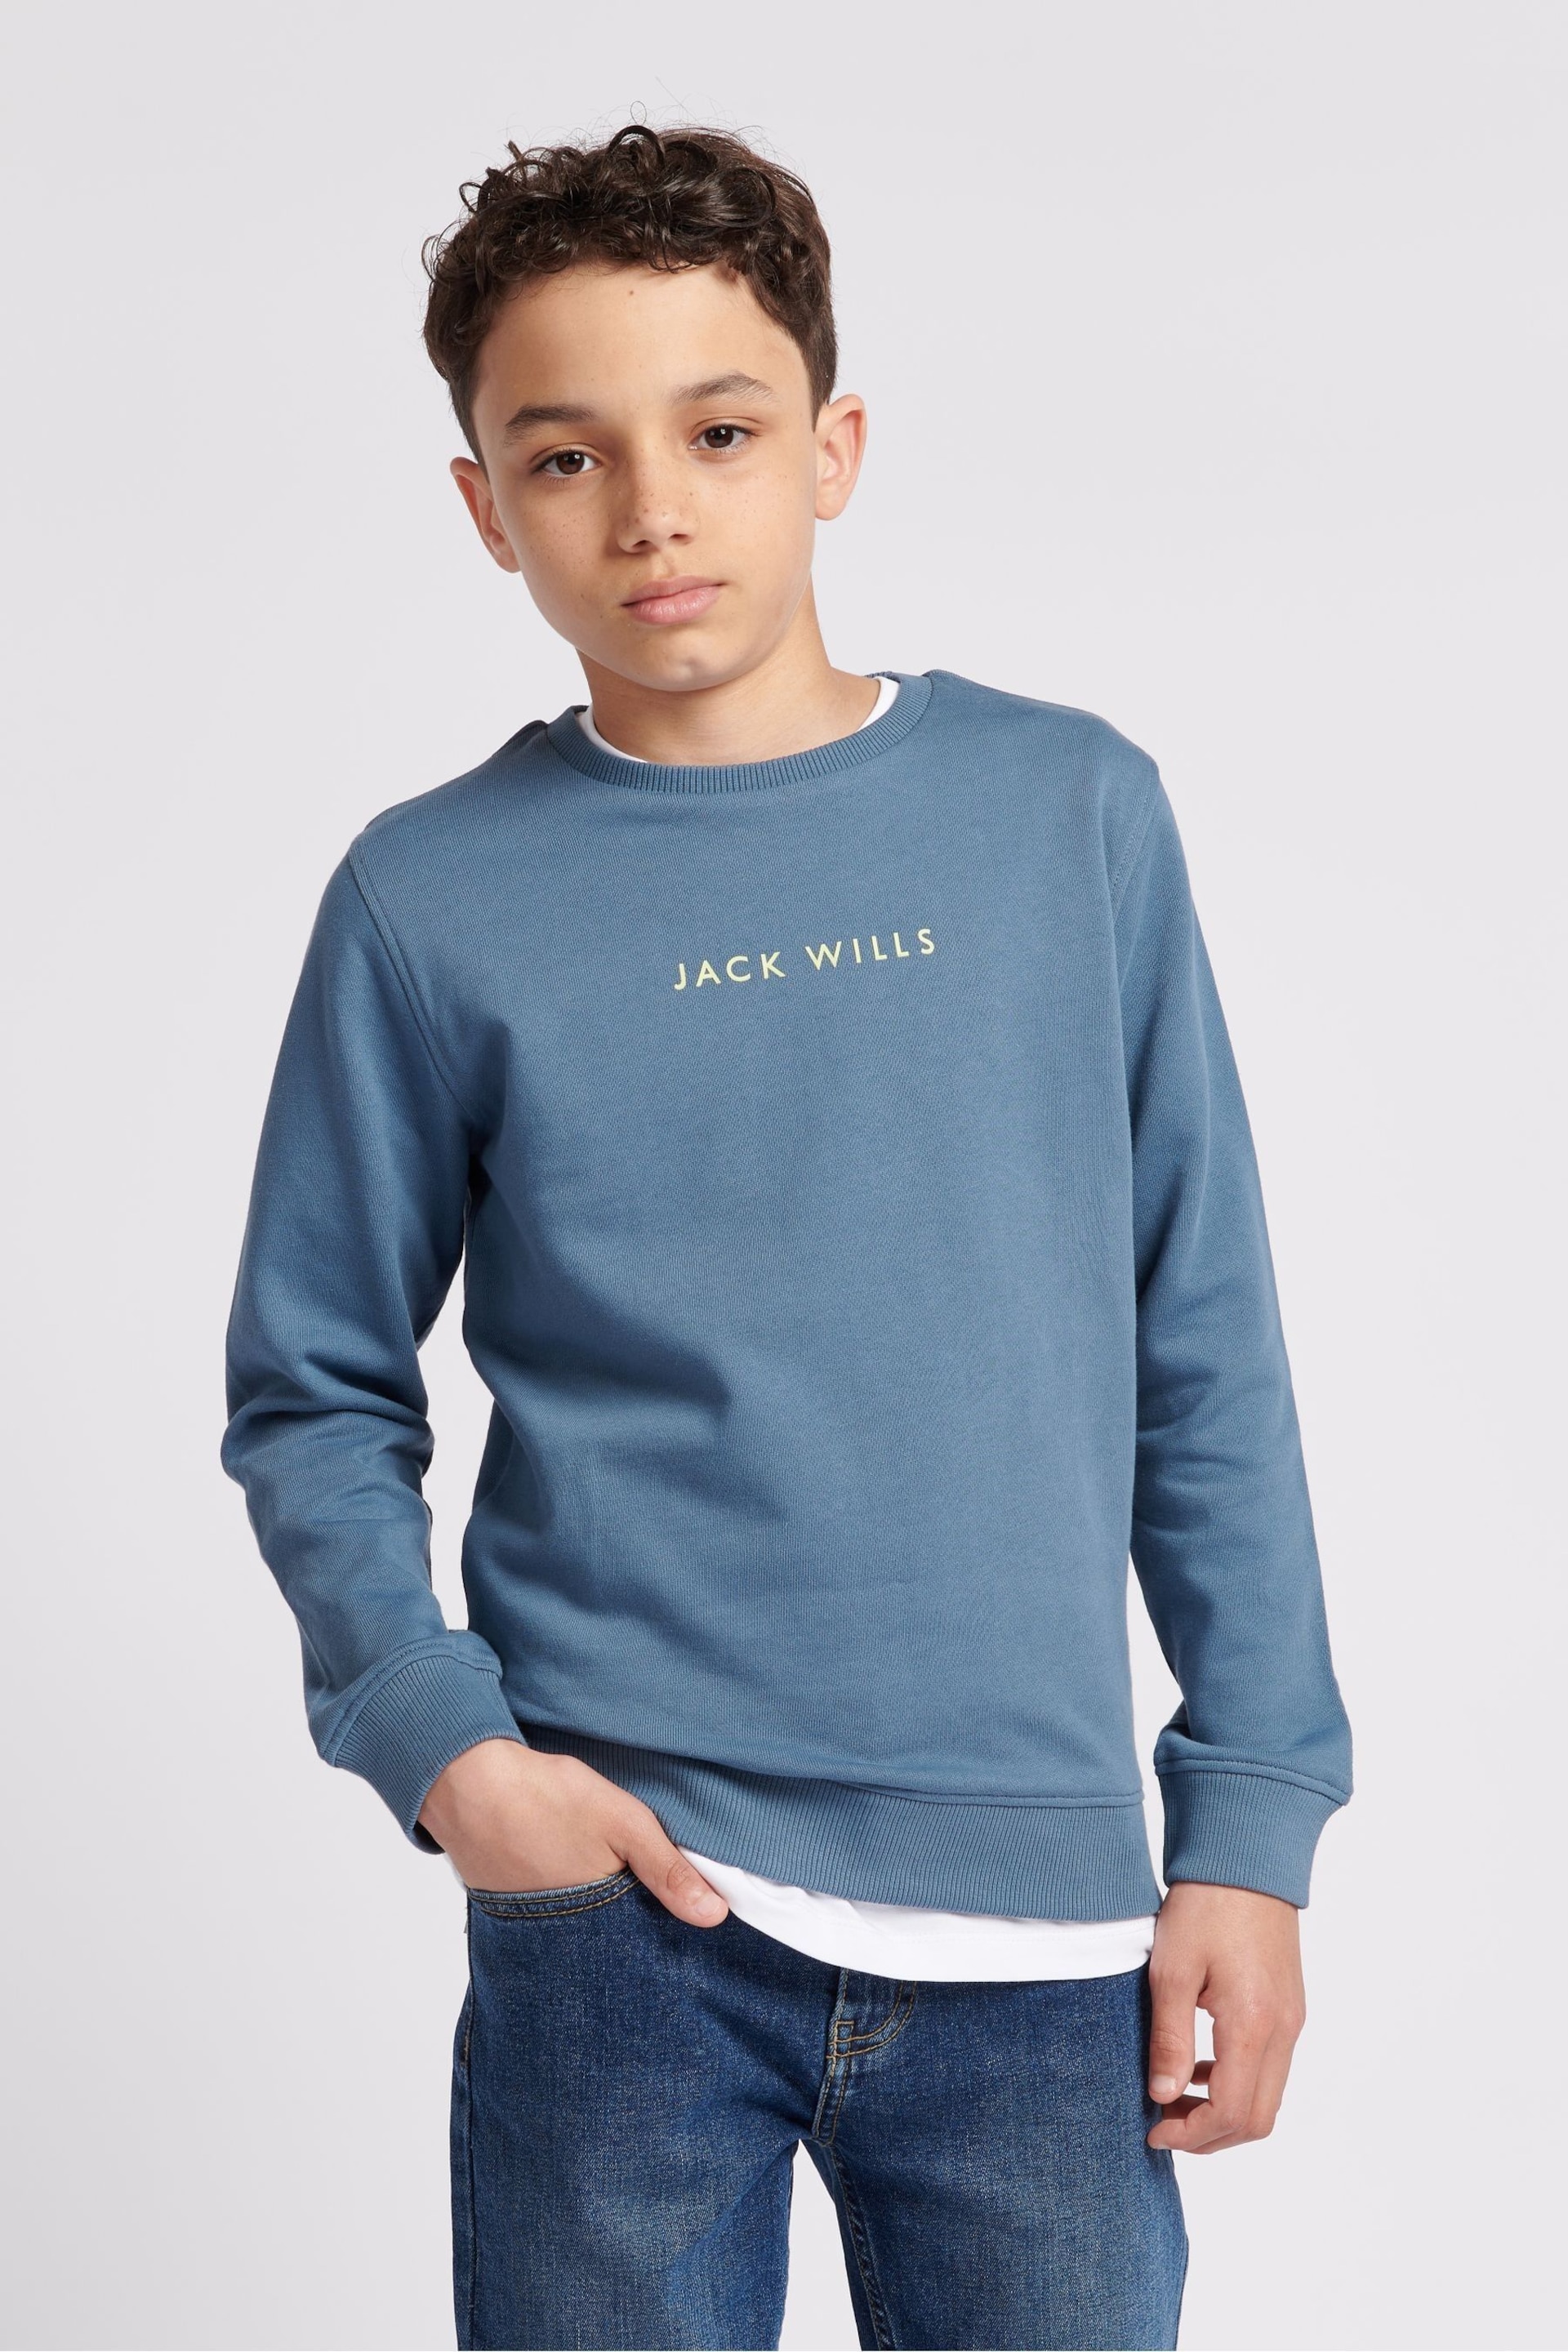 Jack Wills Boys Blue Digital Graphic Sweatshirt - Image 1 of 7